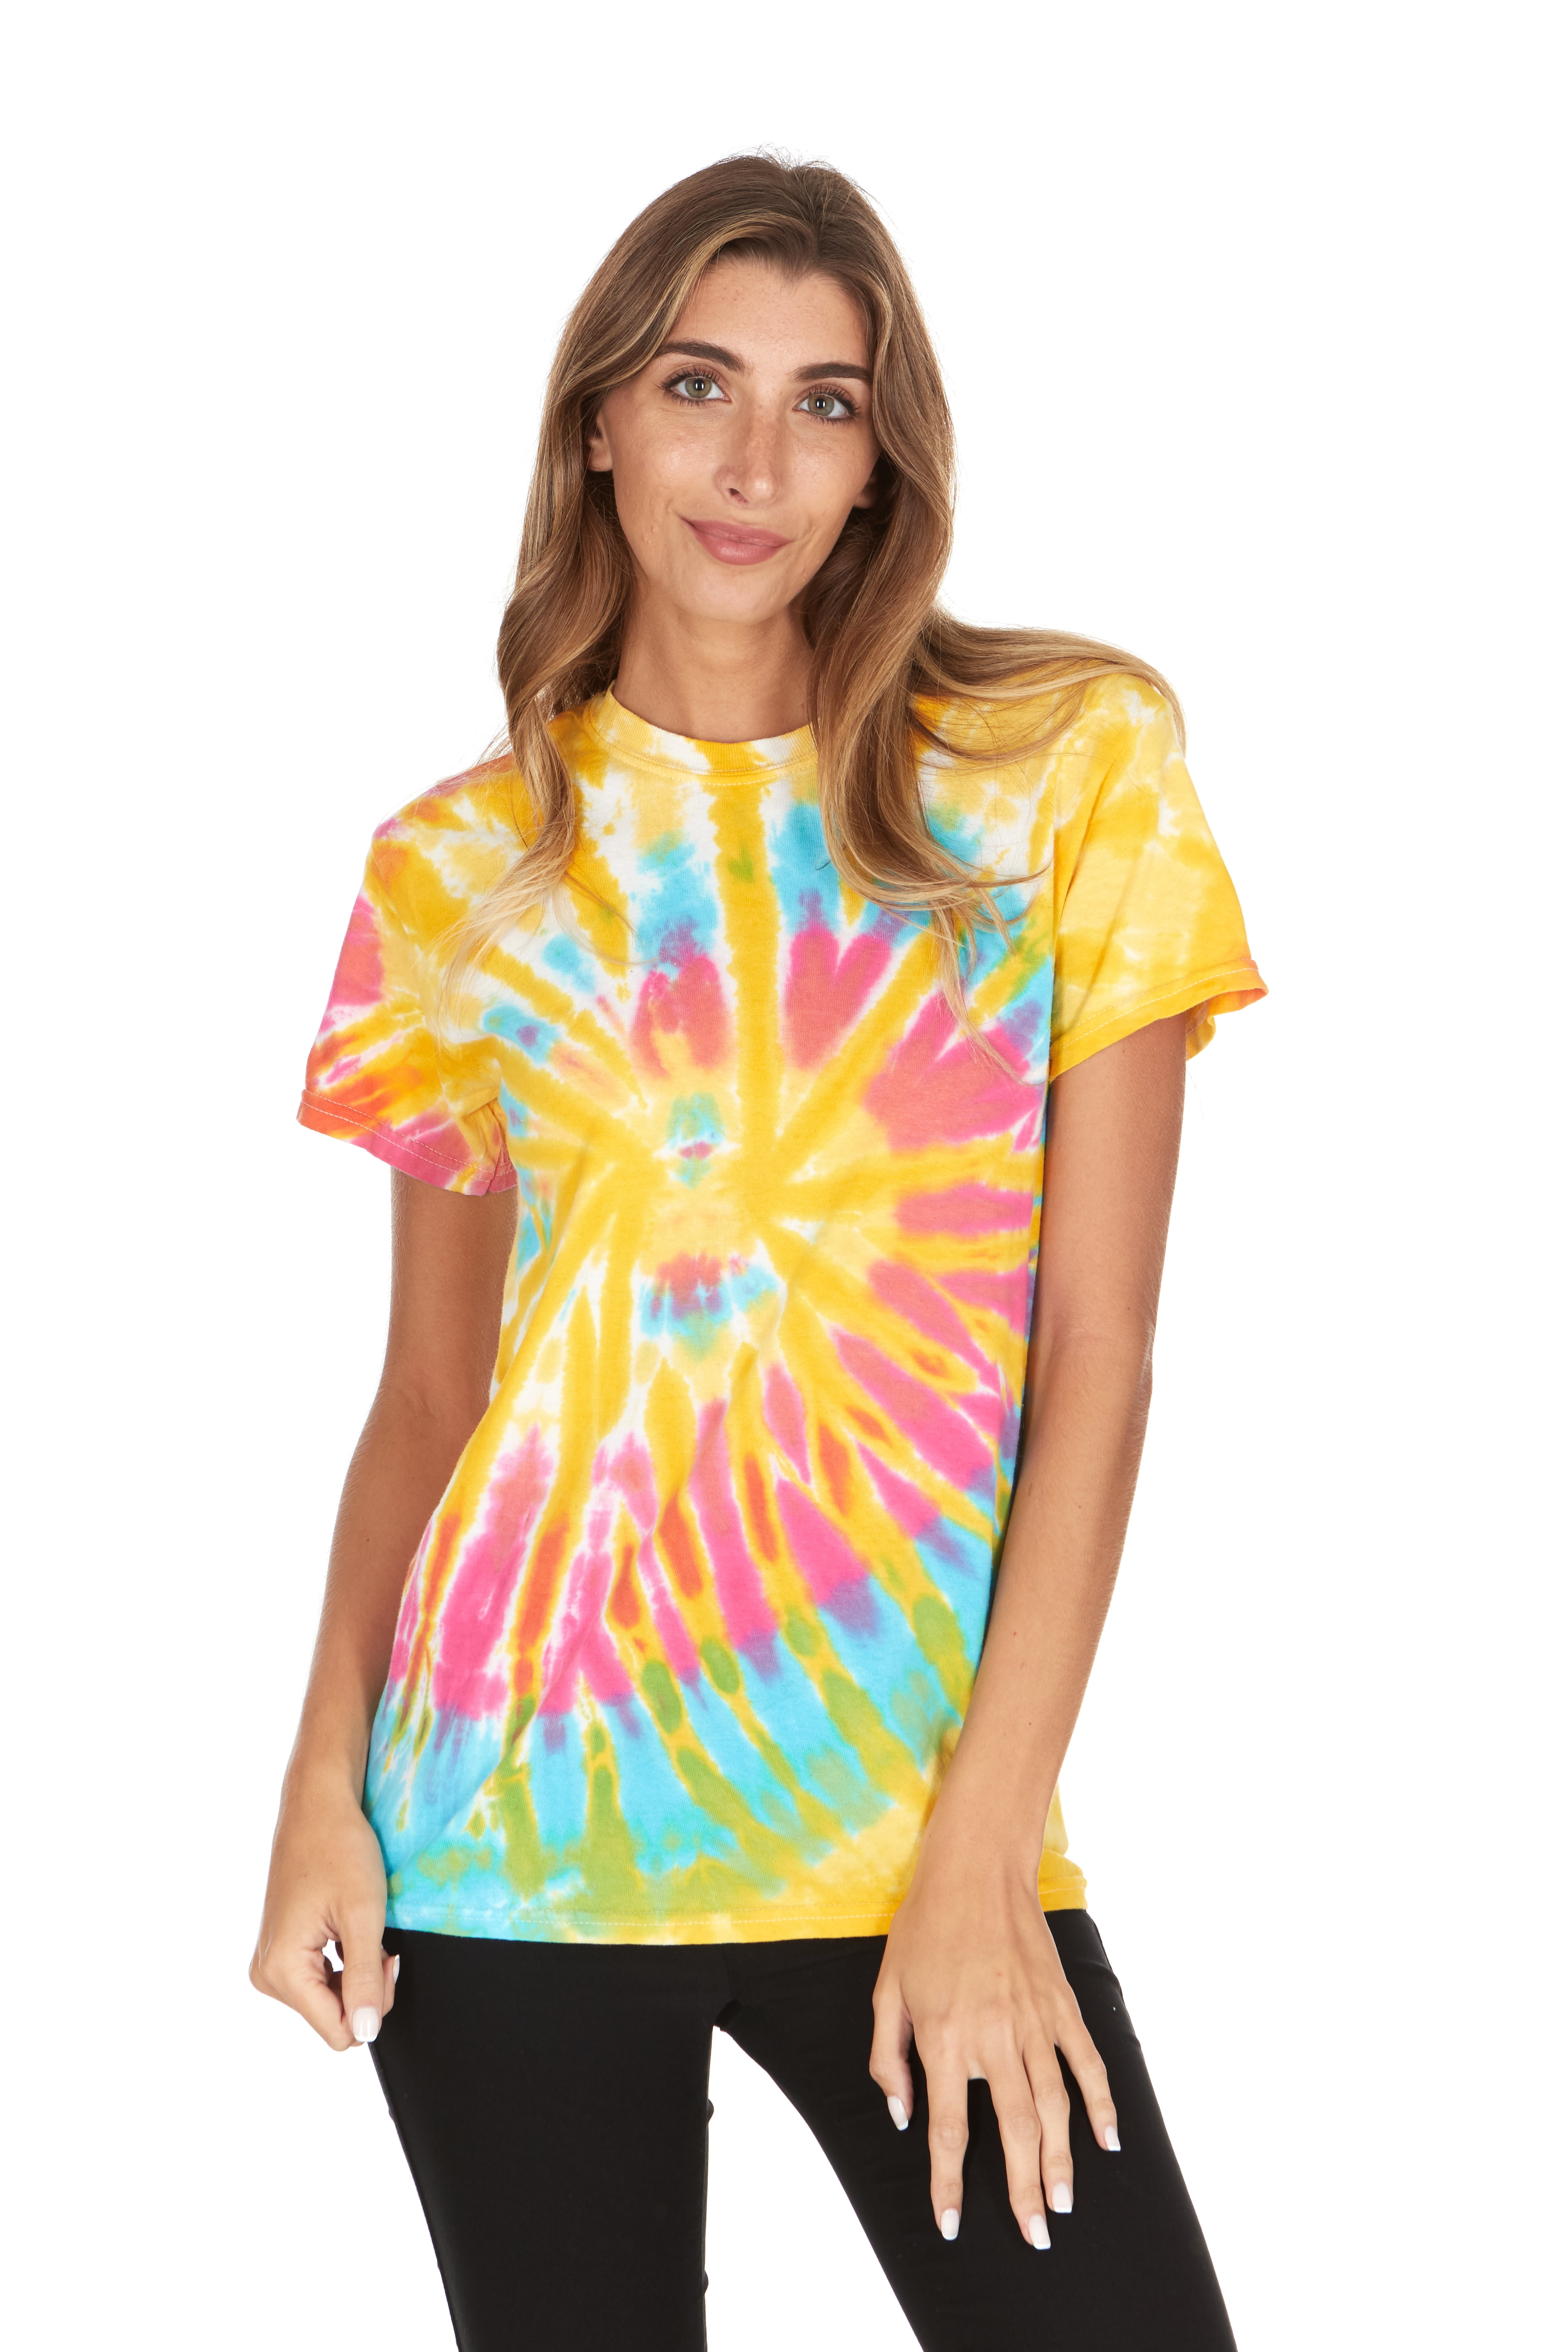 Daresay Tie Dye Style T-Shirts Women - Fun, Multi Color designs Tops ...